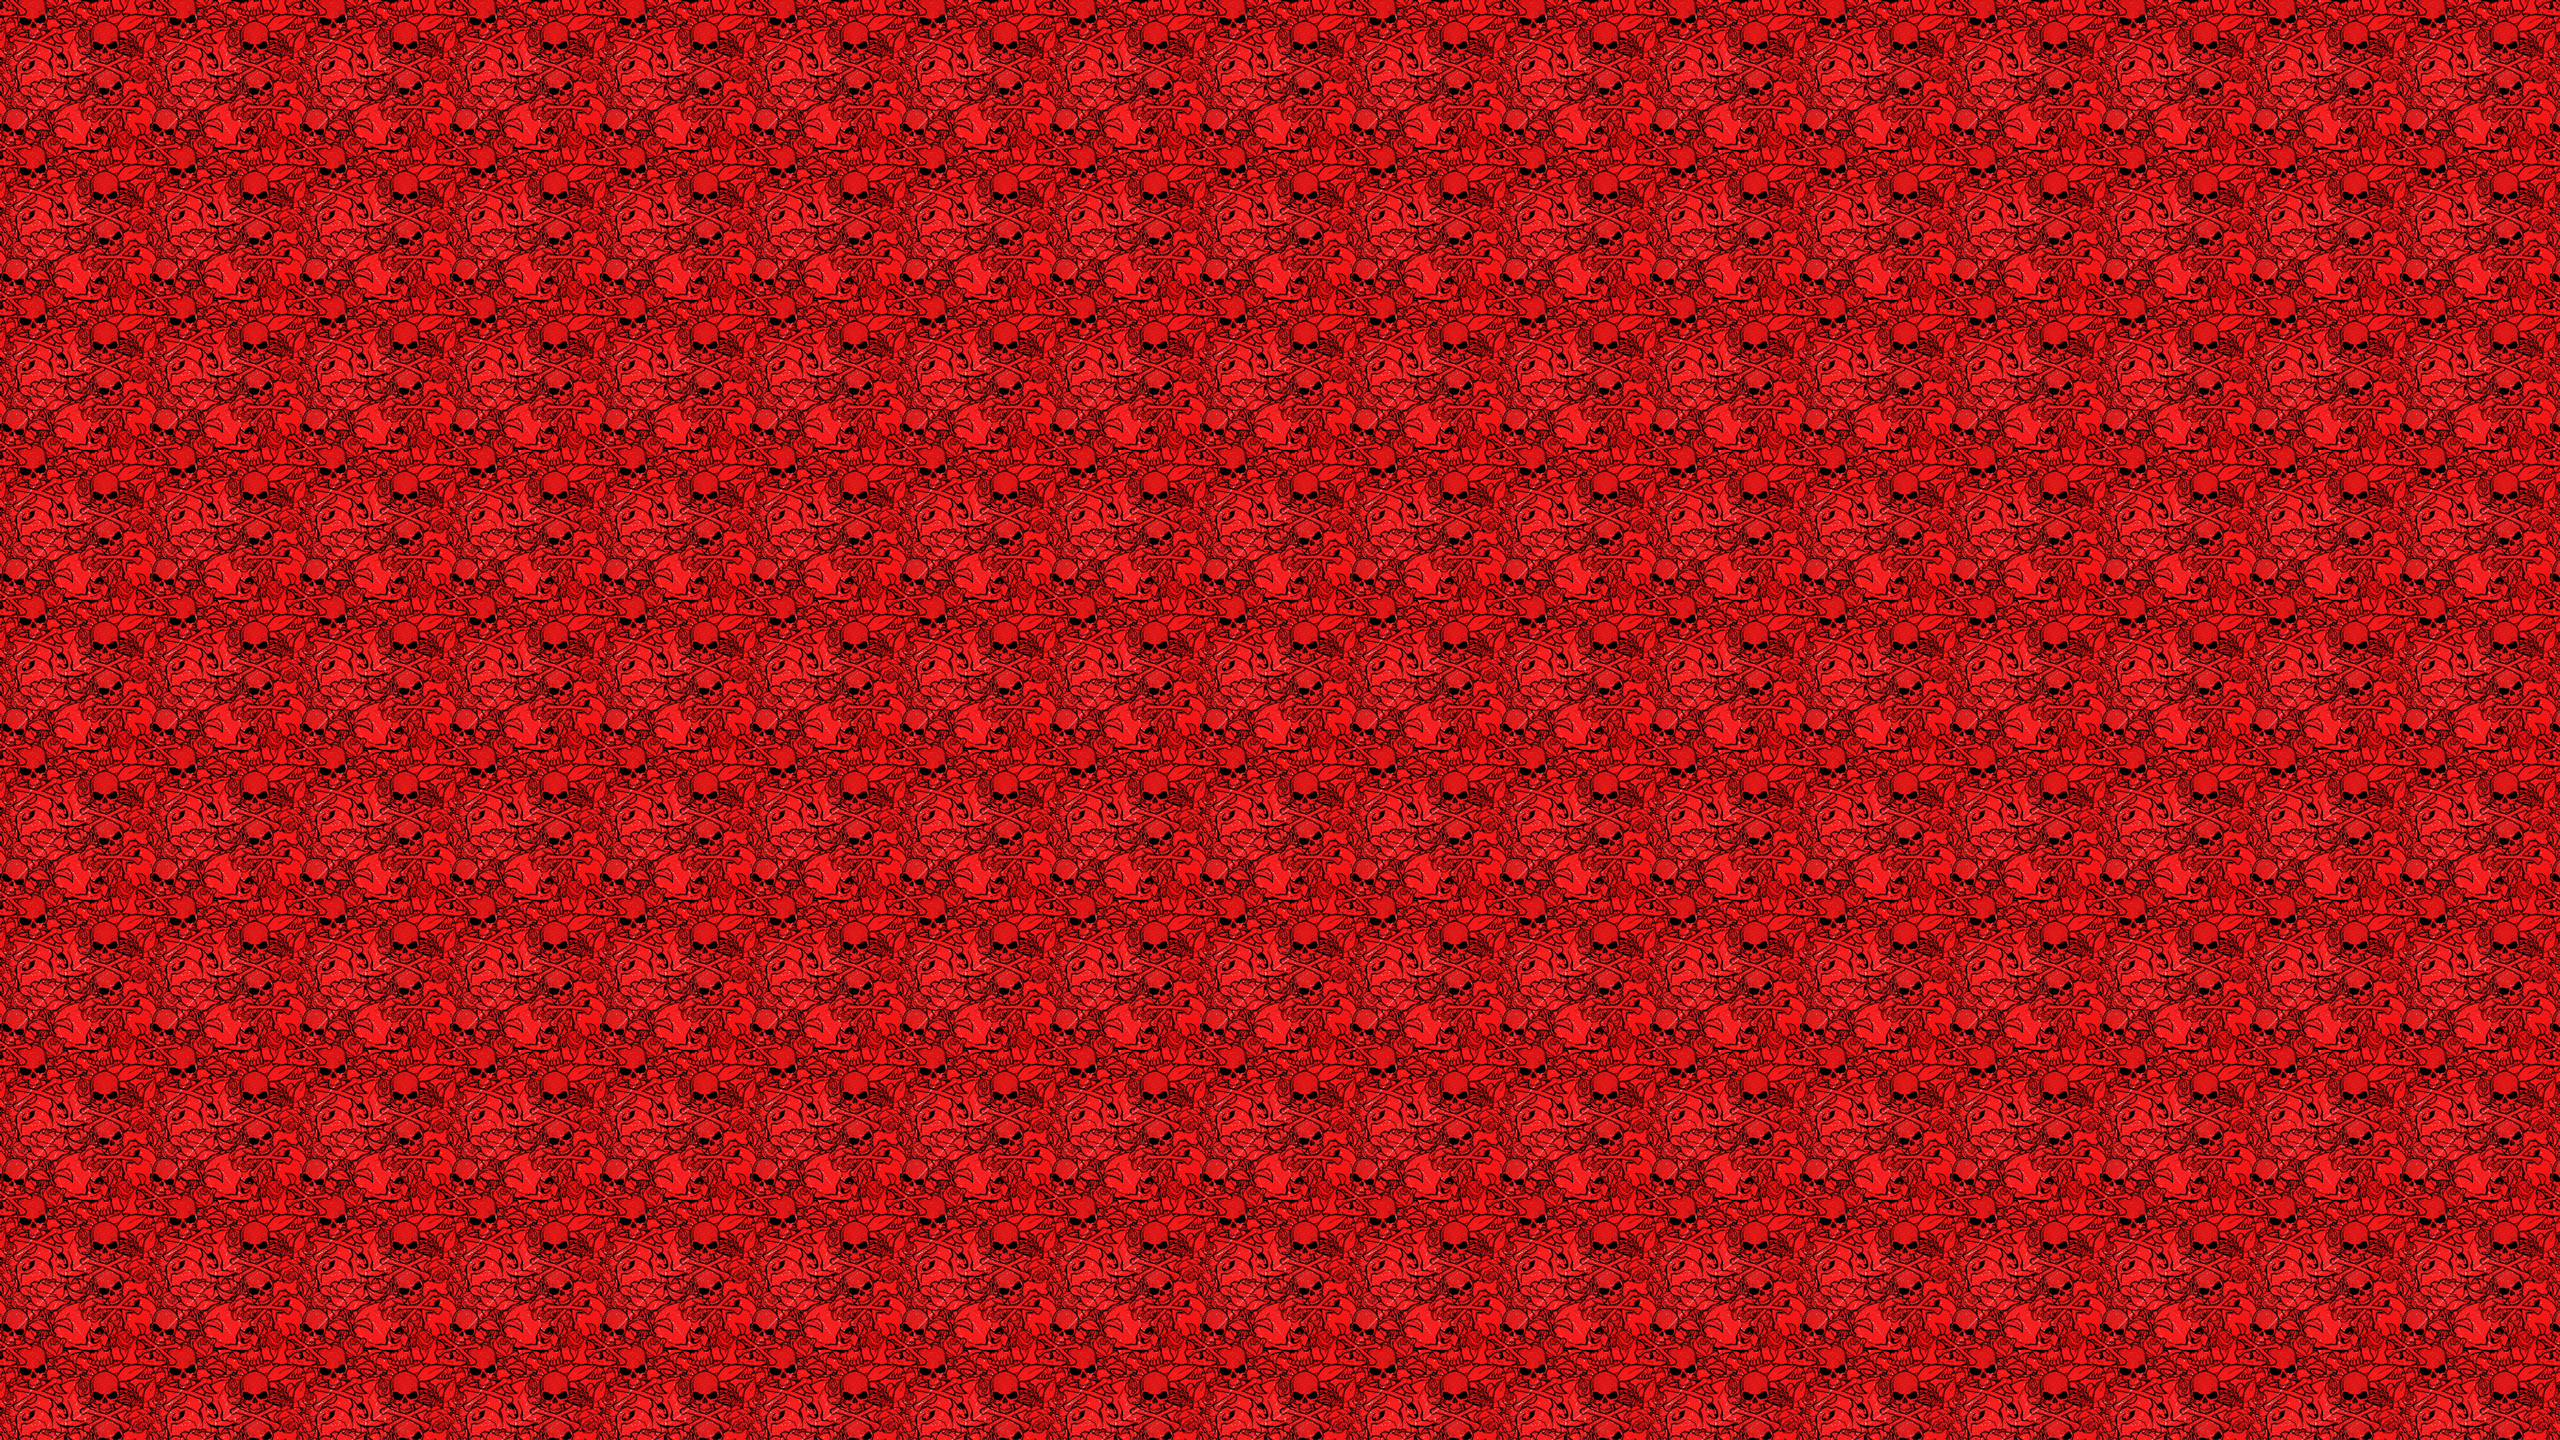 Red Falling Skulls Desktop Wallpapers